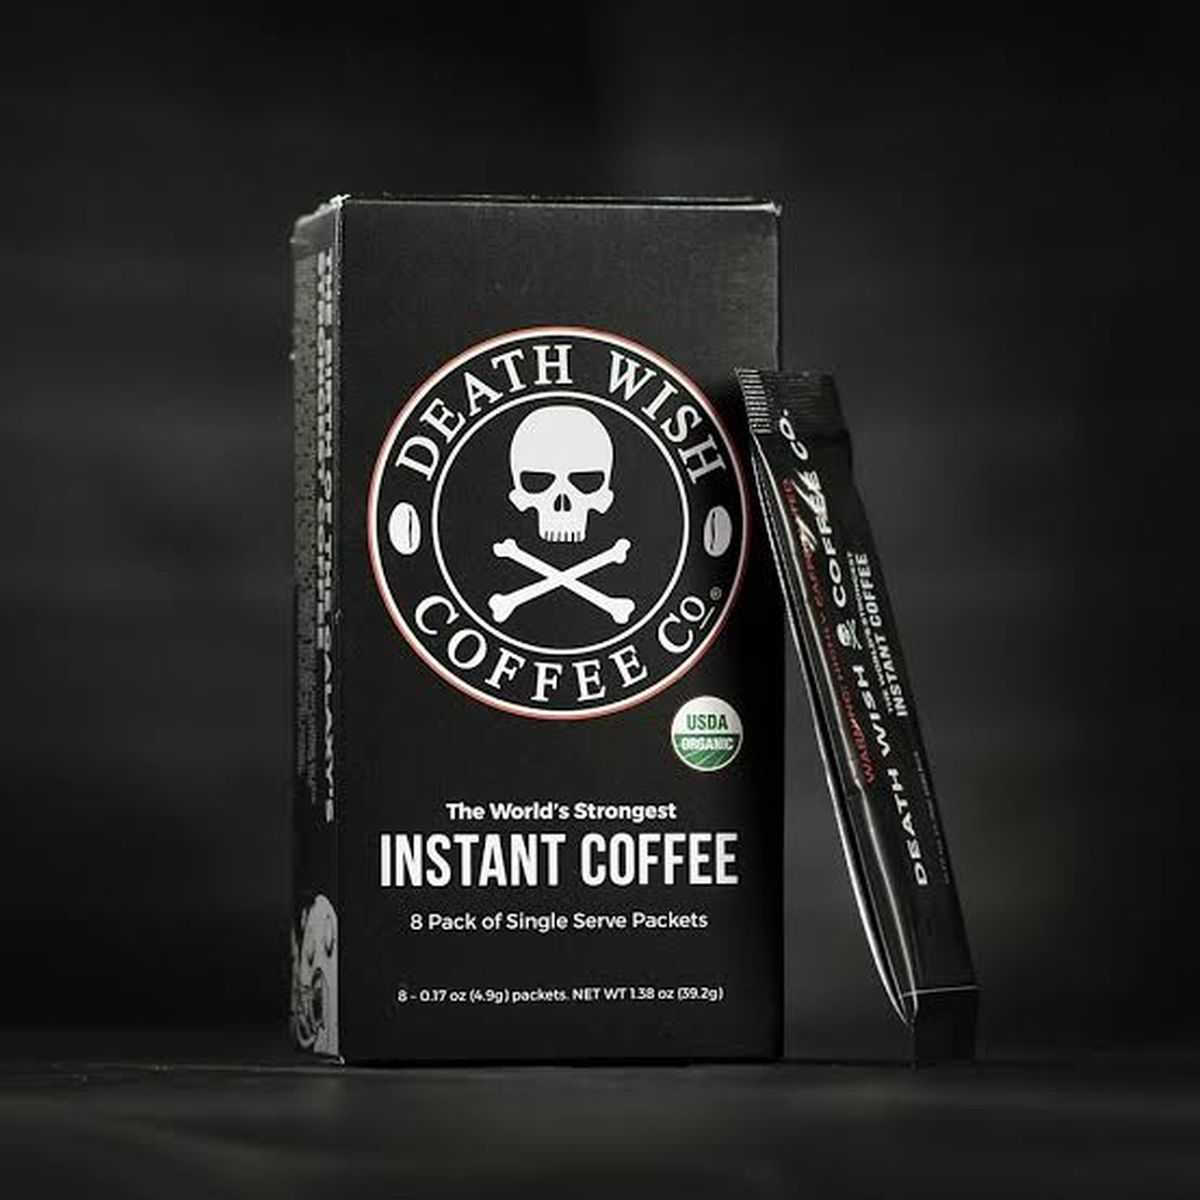 Death Wish Coffee Co